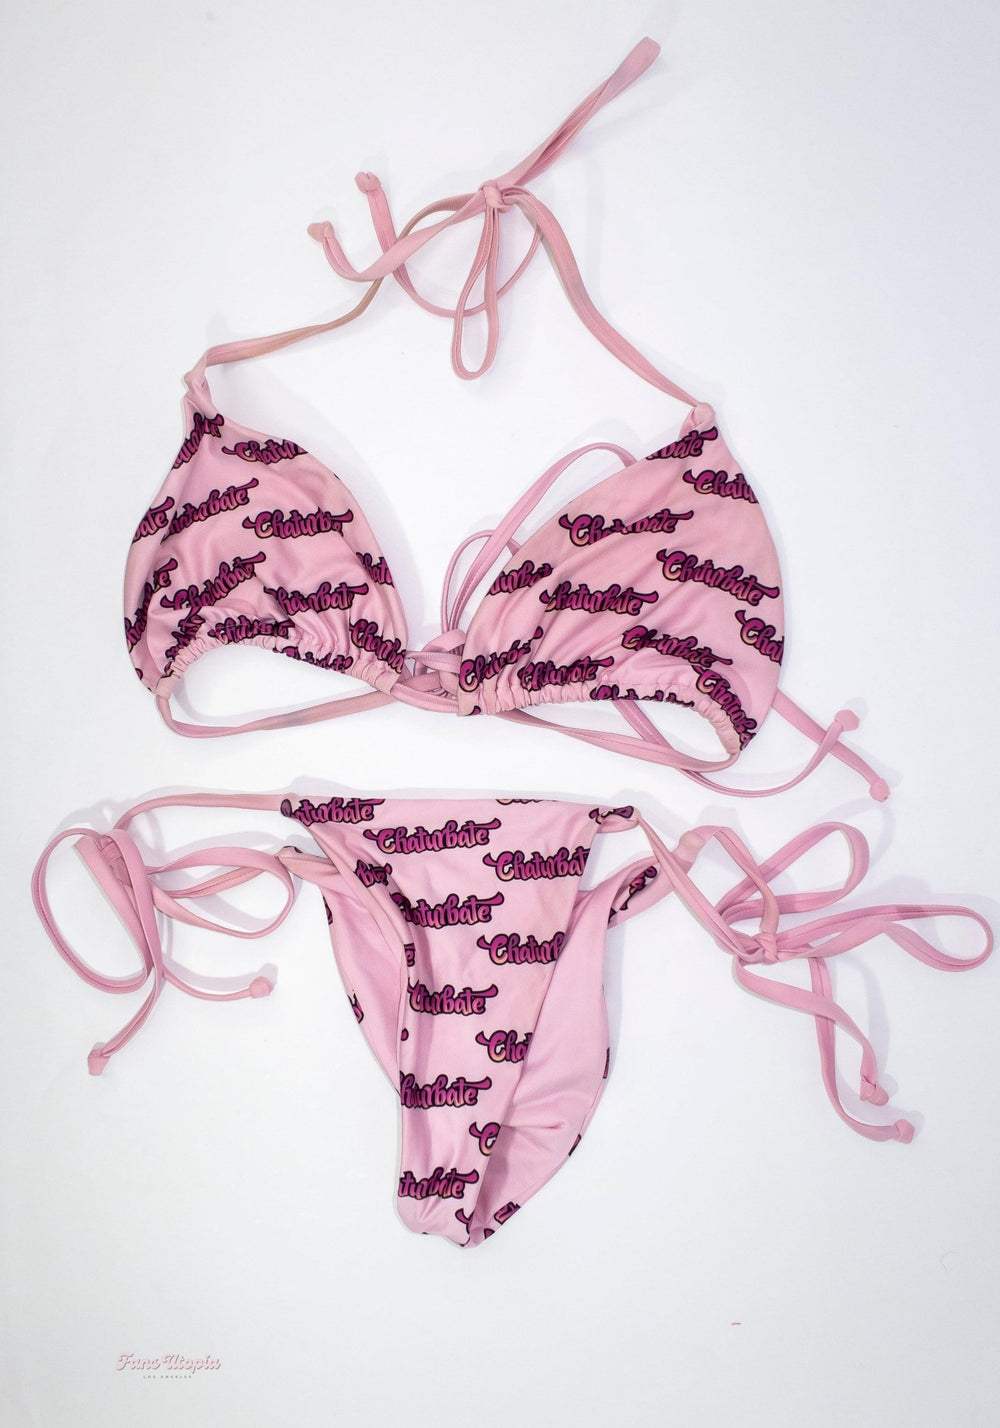 Payton Preslee Chaturbate Pink Bikini - FANS UTOPIA